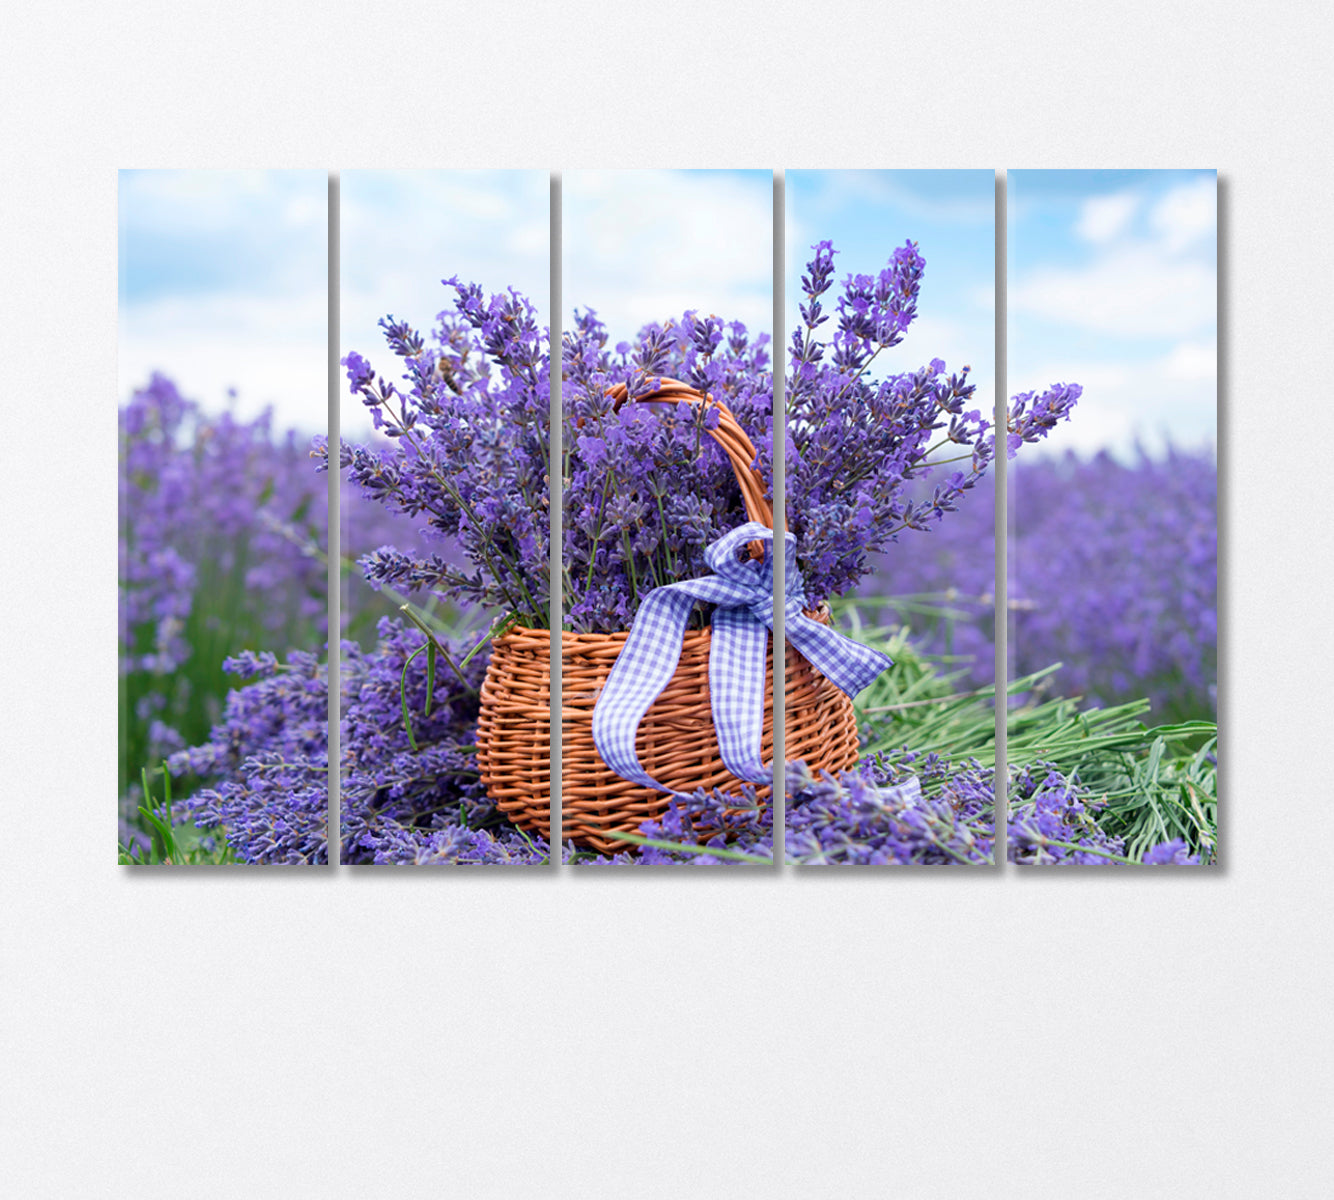 Lavender Bouquet in Wicker Basket Canvas Print-Canvas Print-CetArt-5 Panels-36x24 inches-CetArt